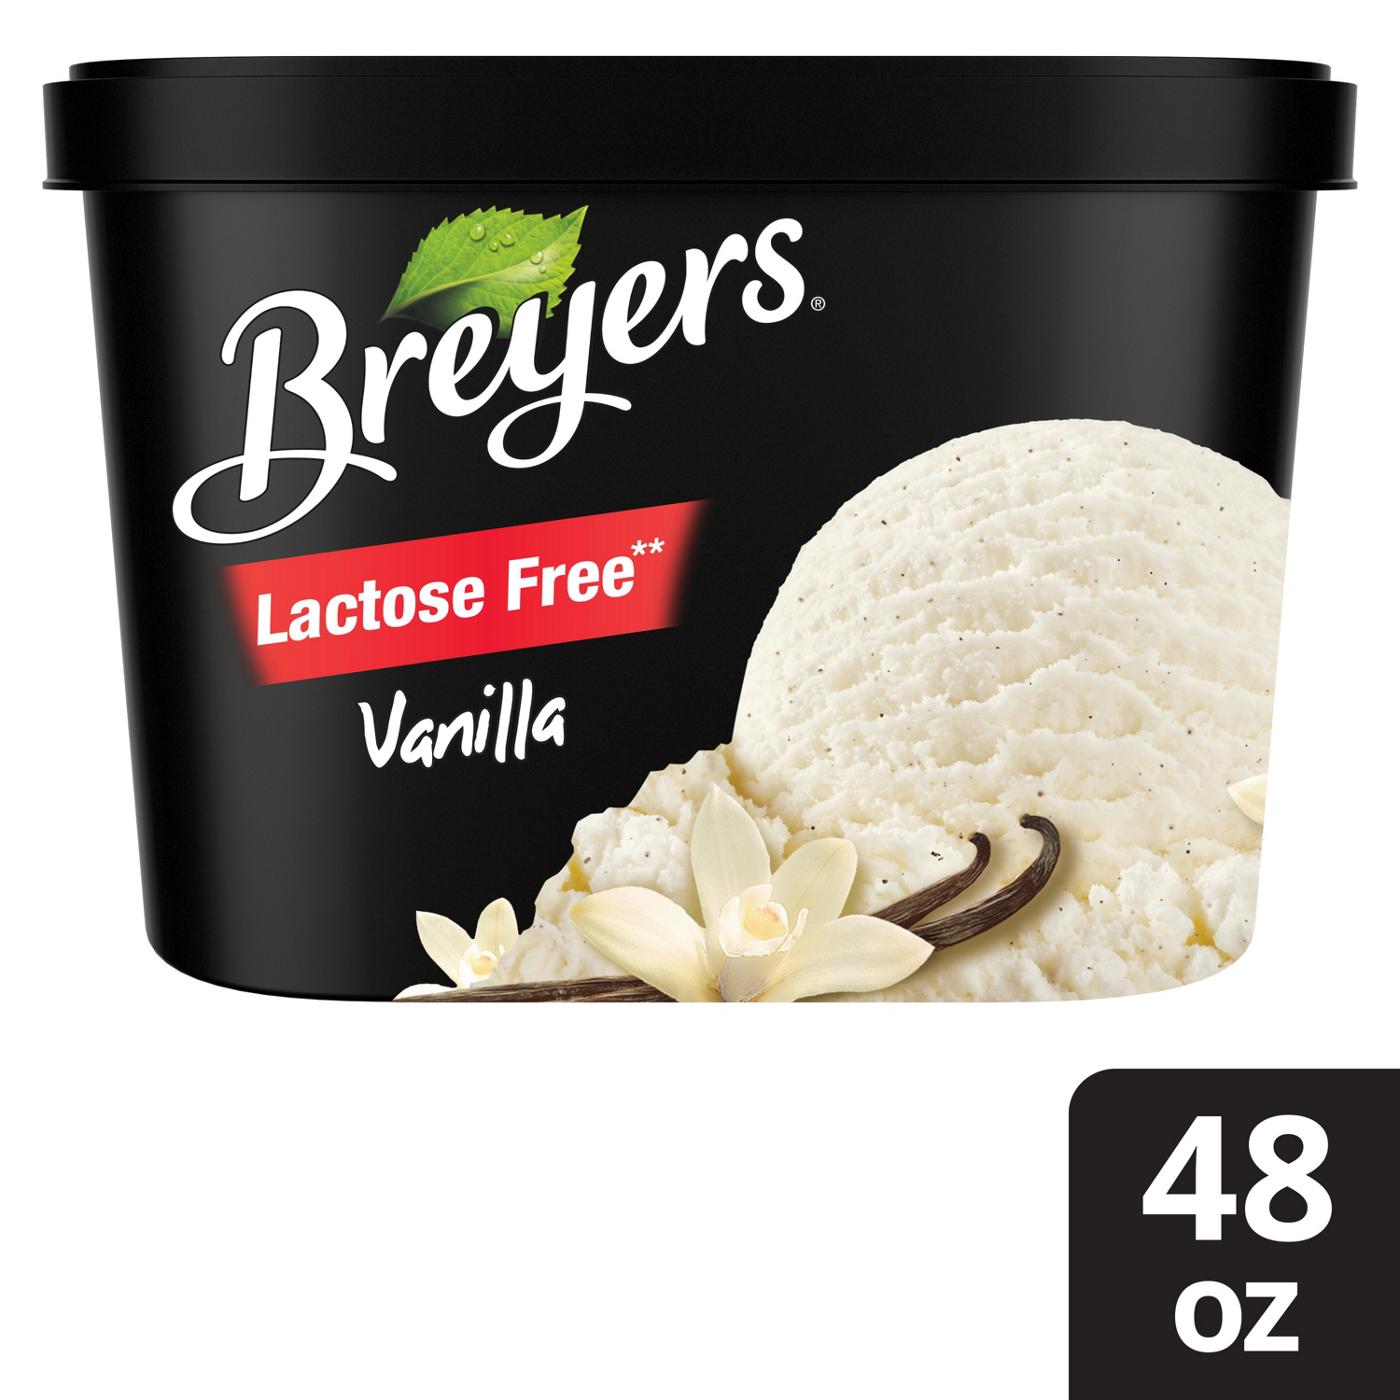 Breyers Lactose Free Vanilla Light Ice Cream; image 2 of 2